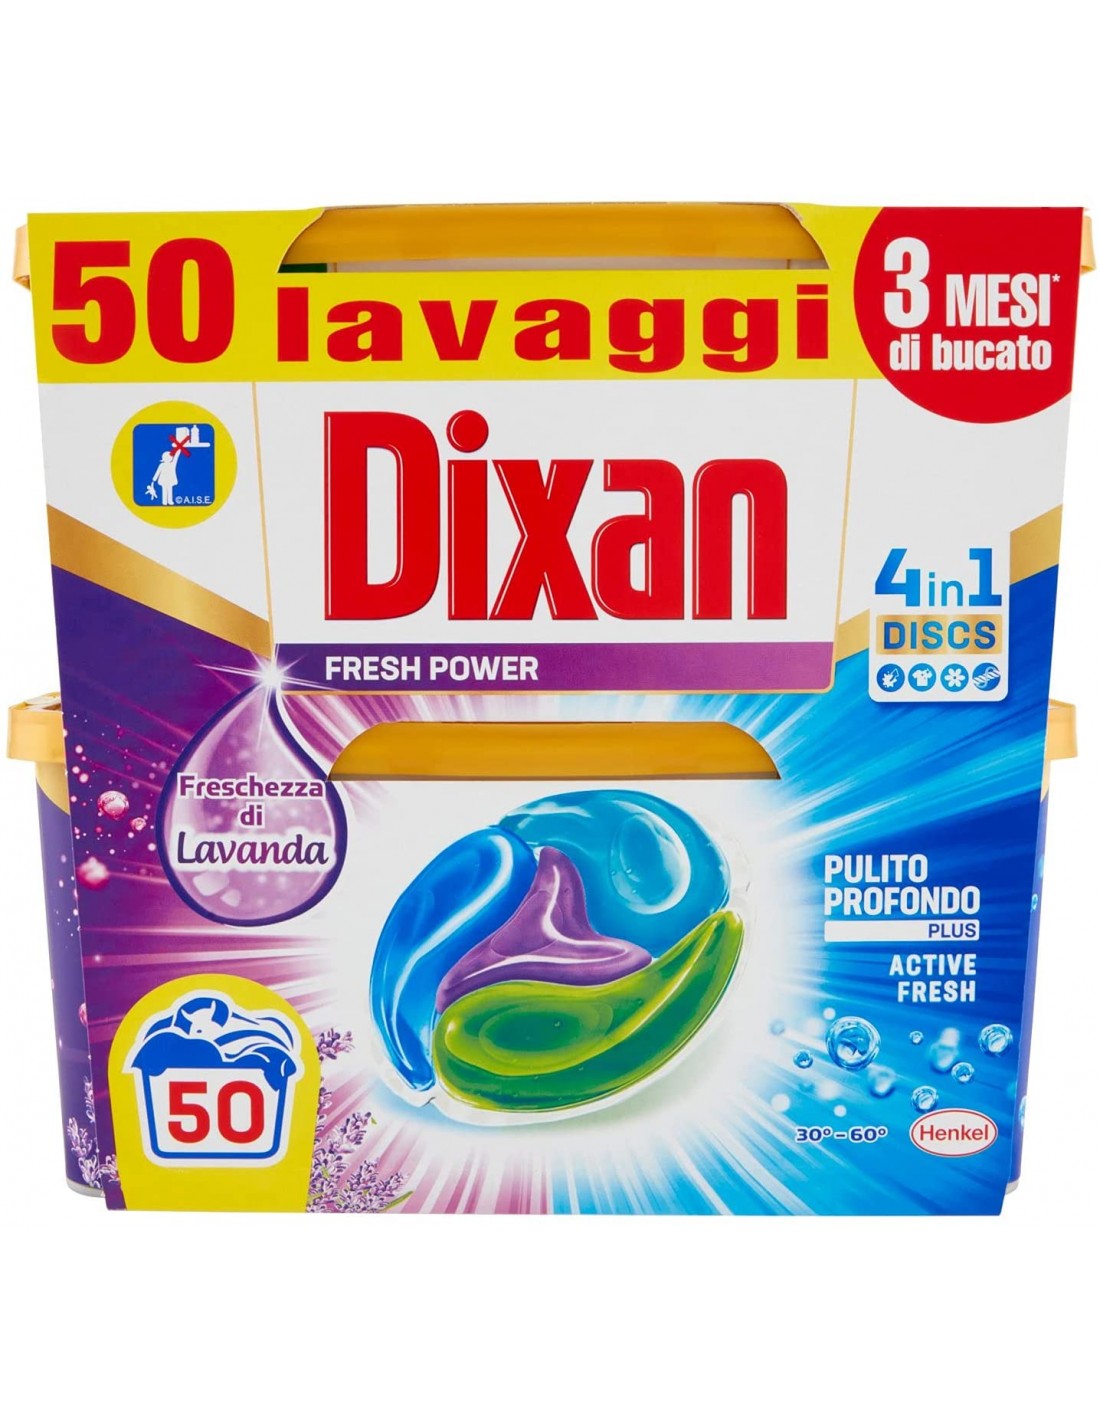 Dixan Offerta Promo Dixan Discs 4 in 1 Active Fresh Lavanda - 50